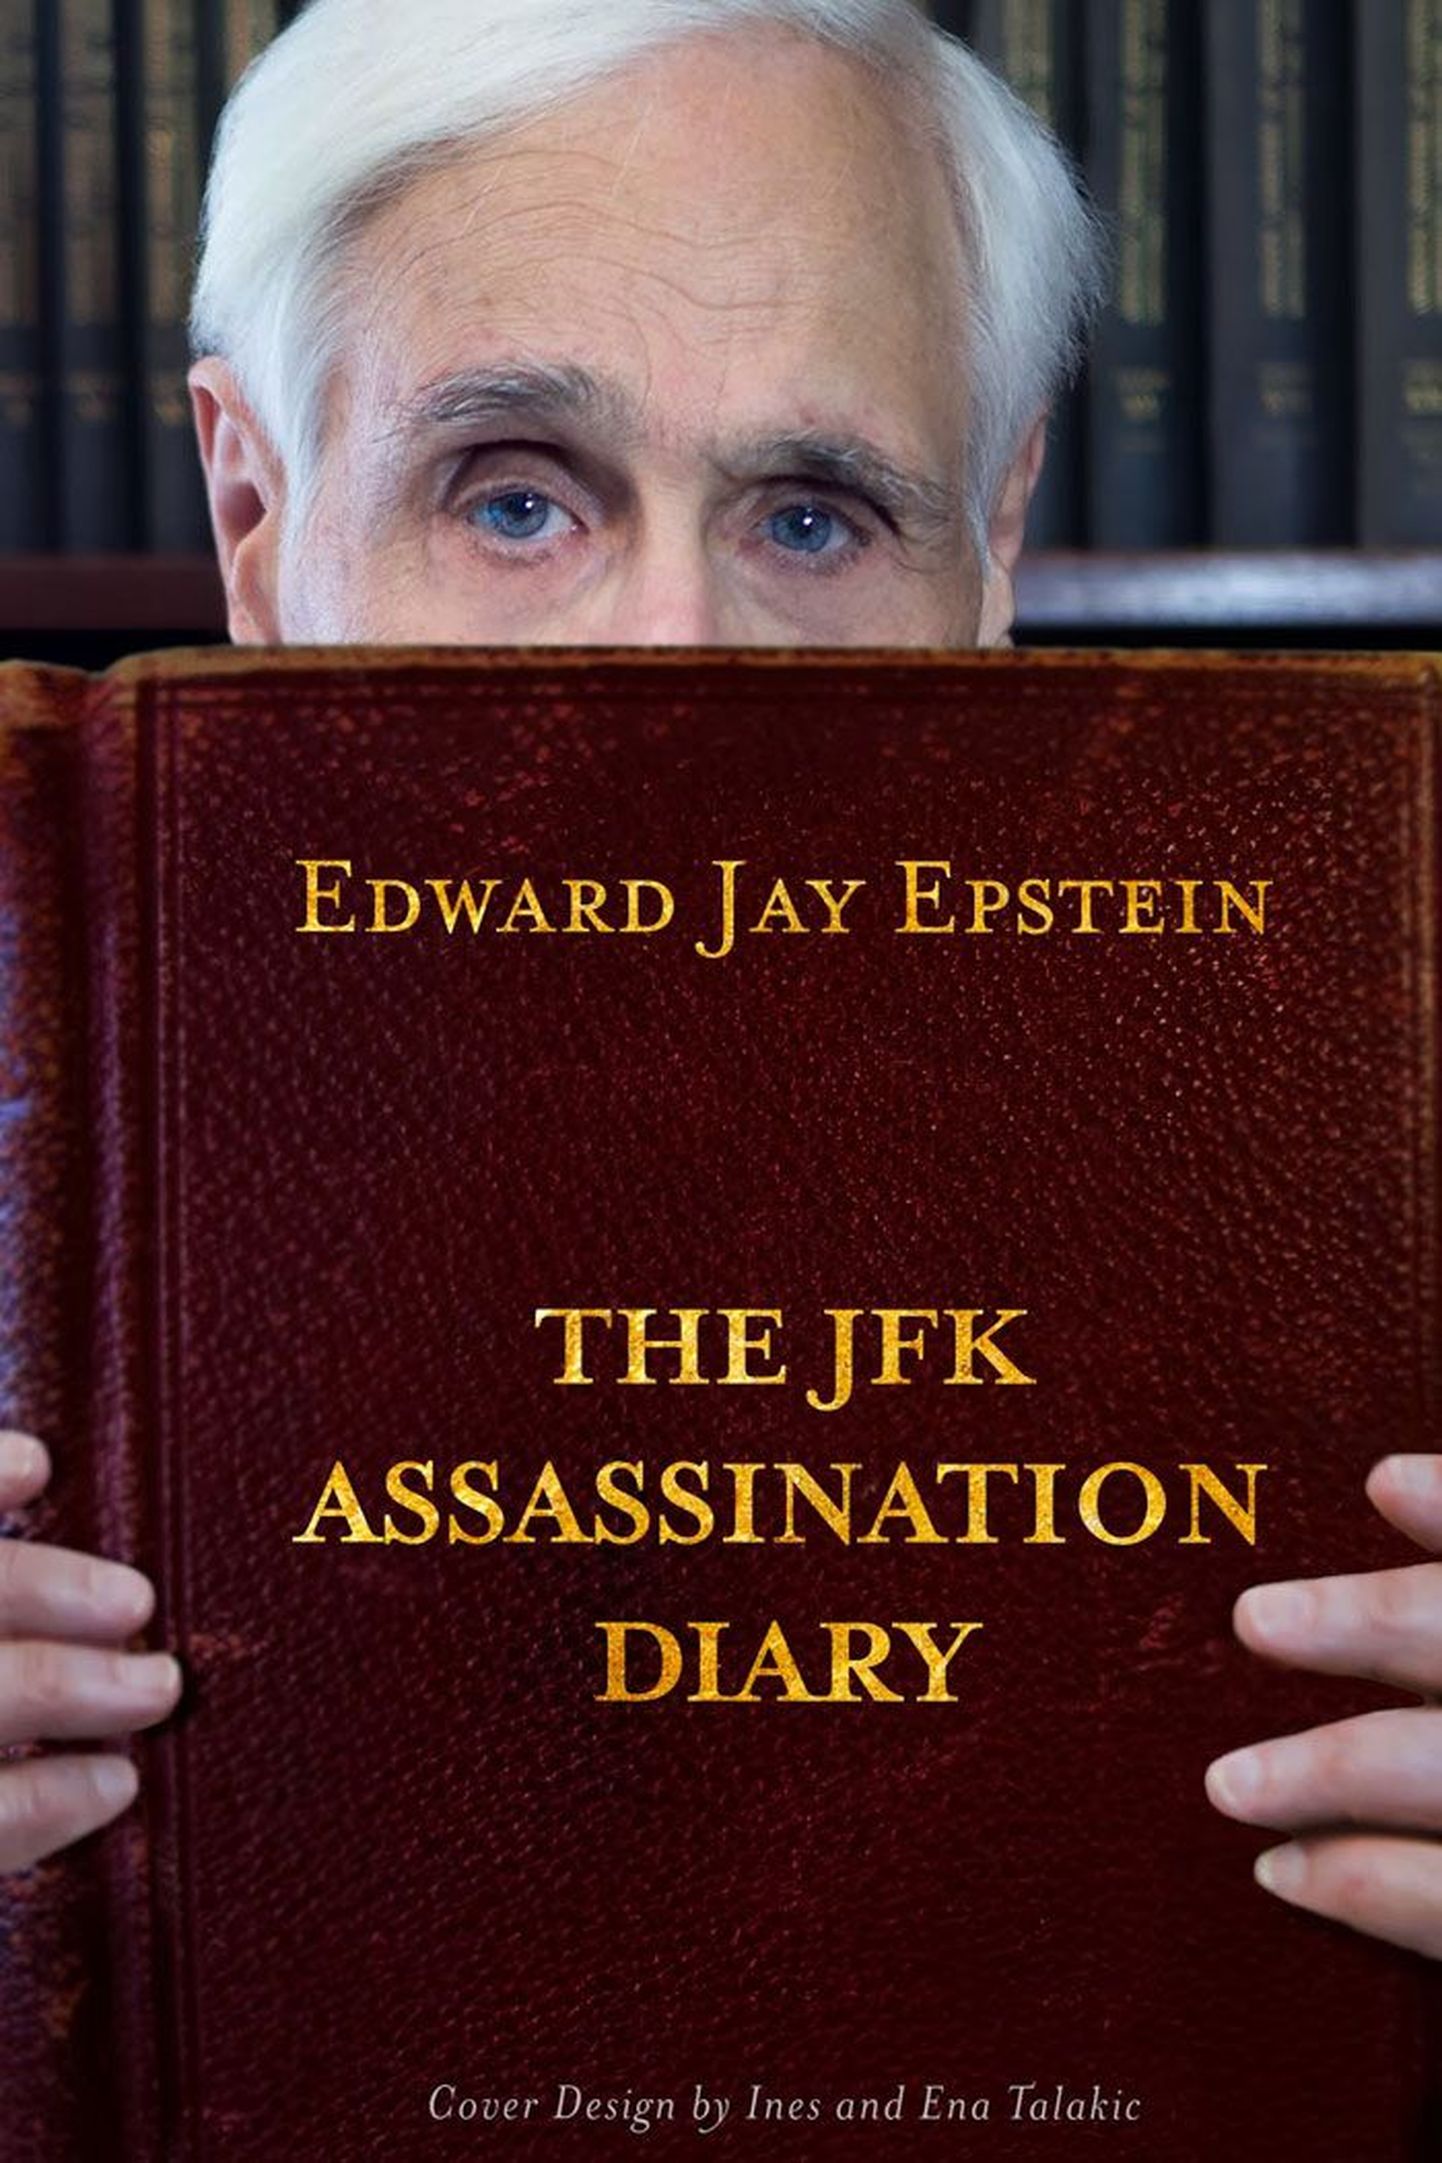 Edward Jay Epstein